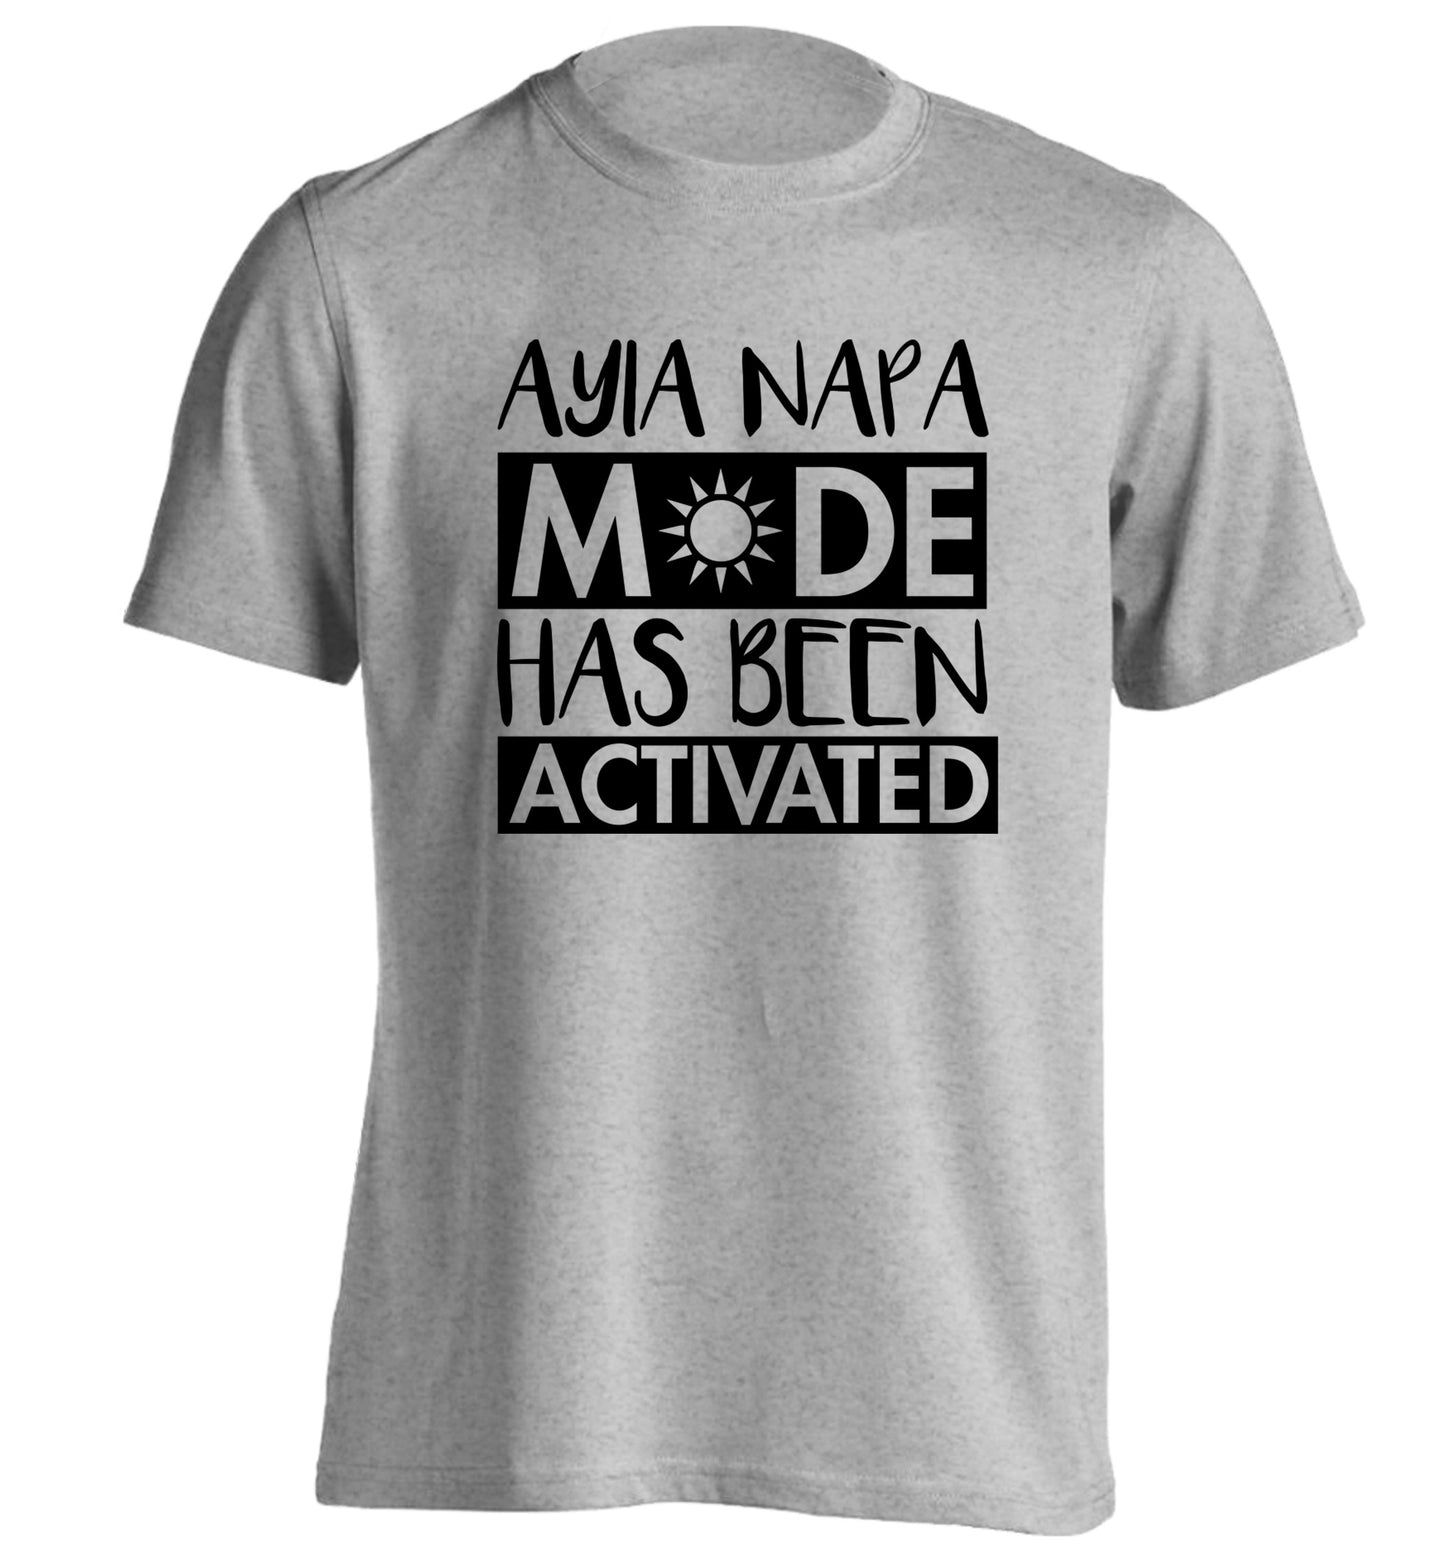 Aiya Napa mode has been activated adults unisex grey Tshirt 2XL